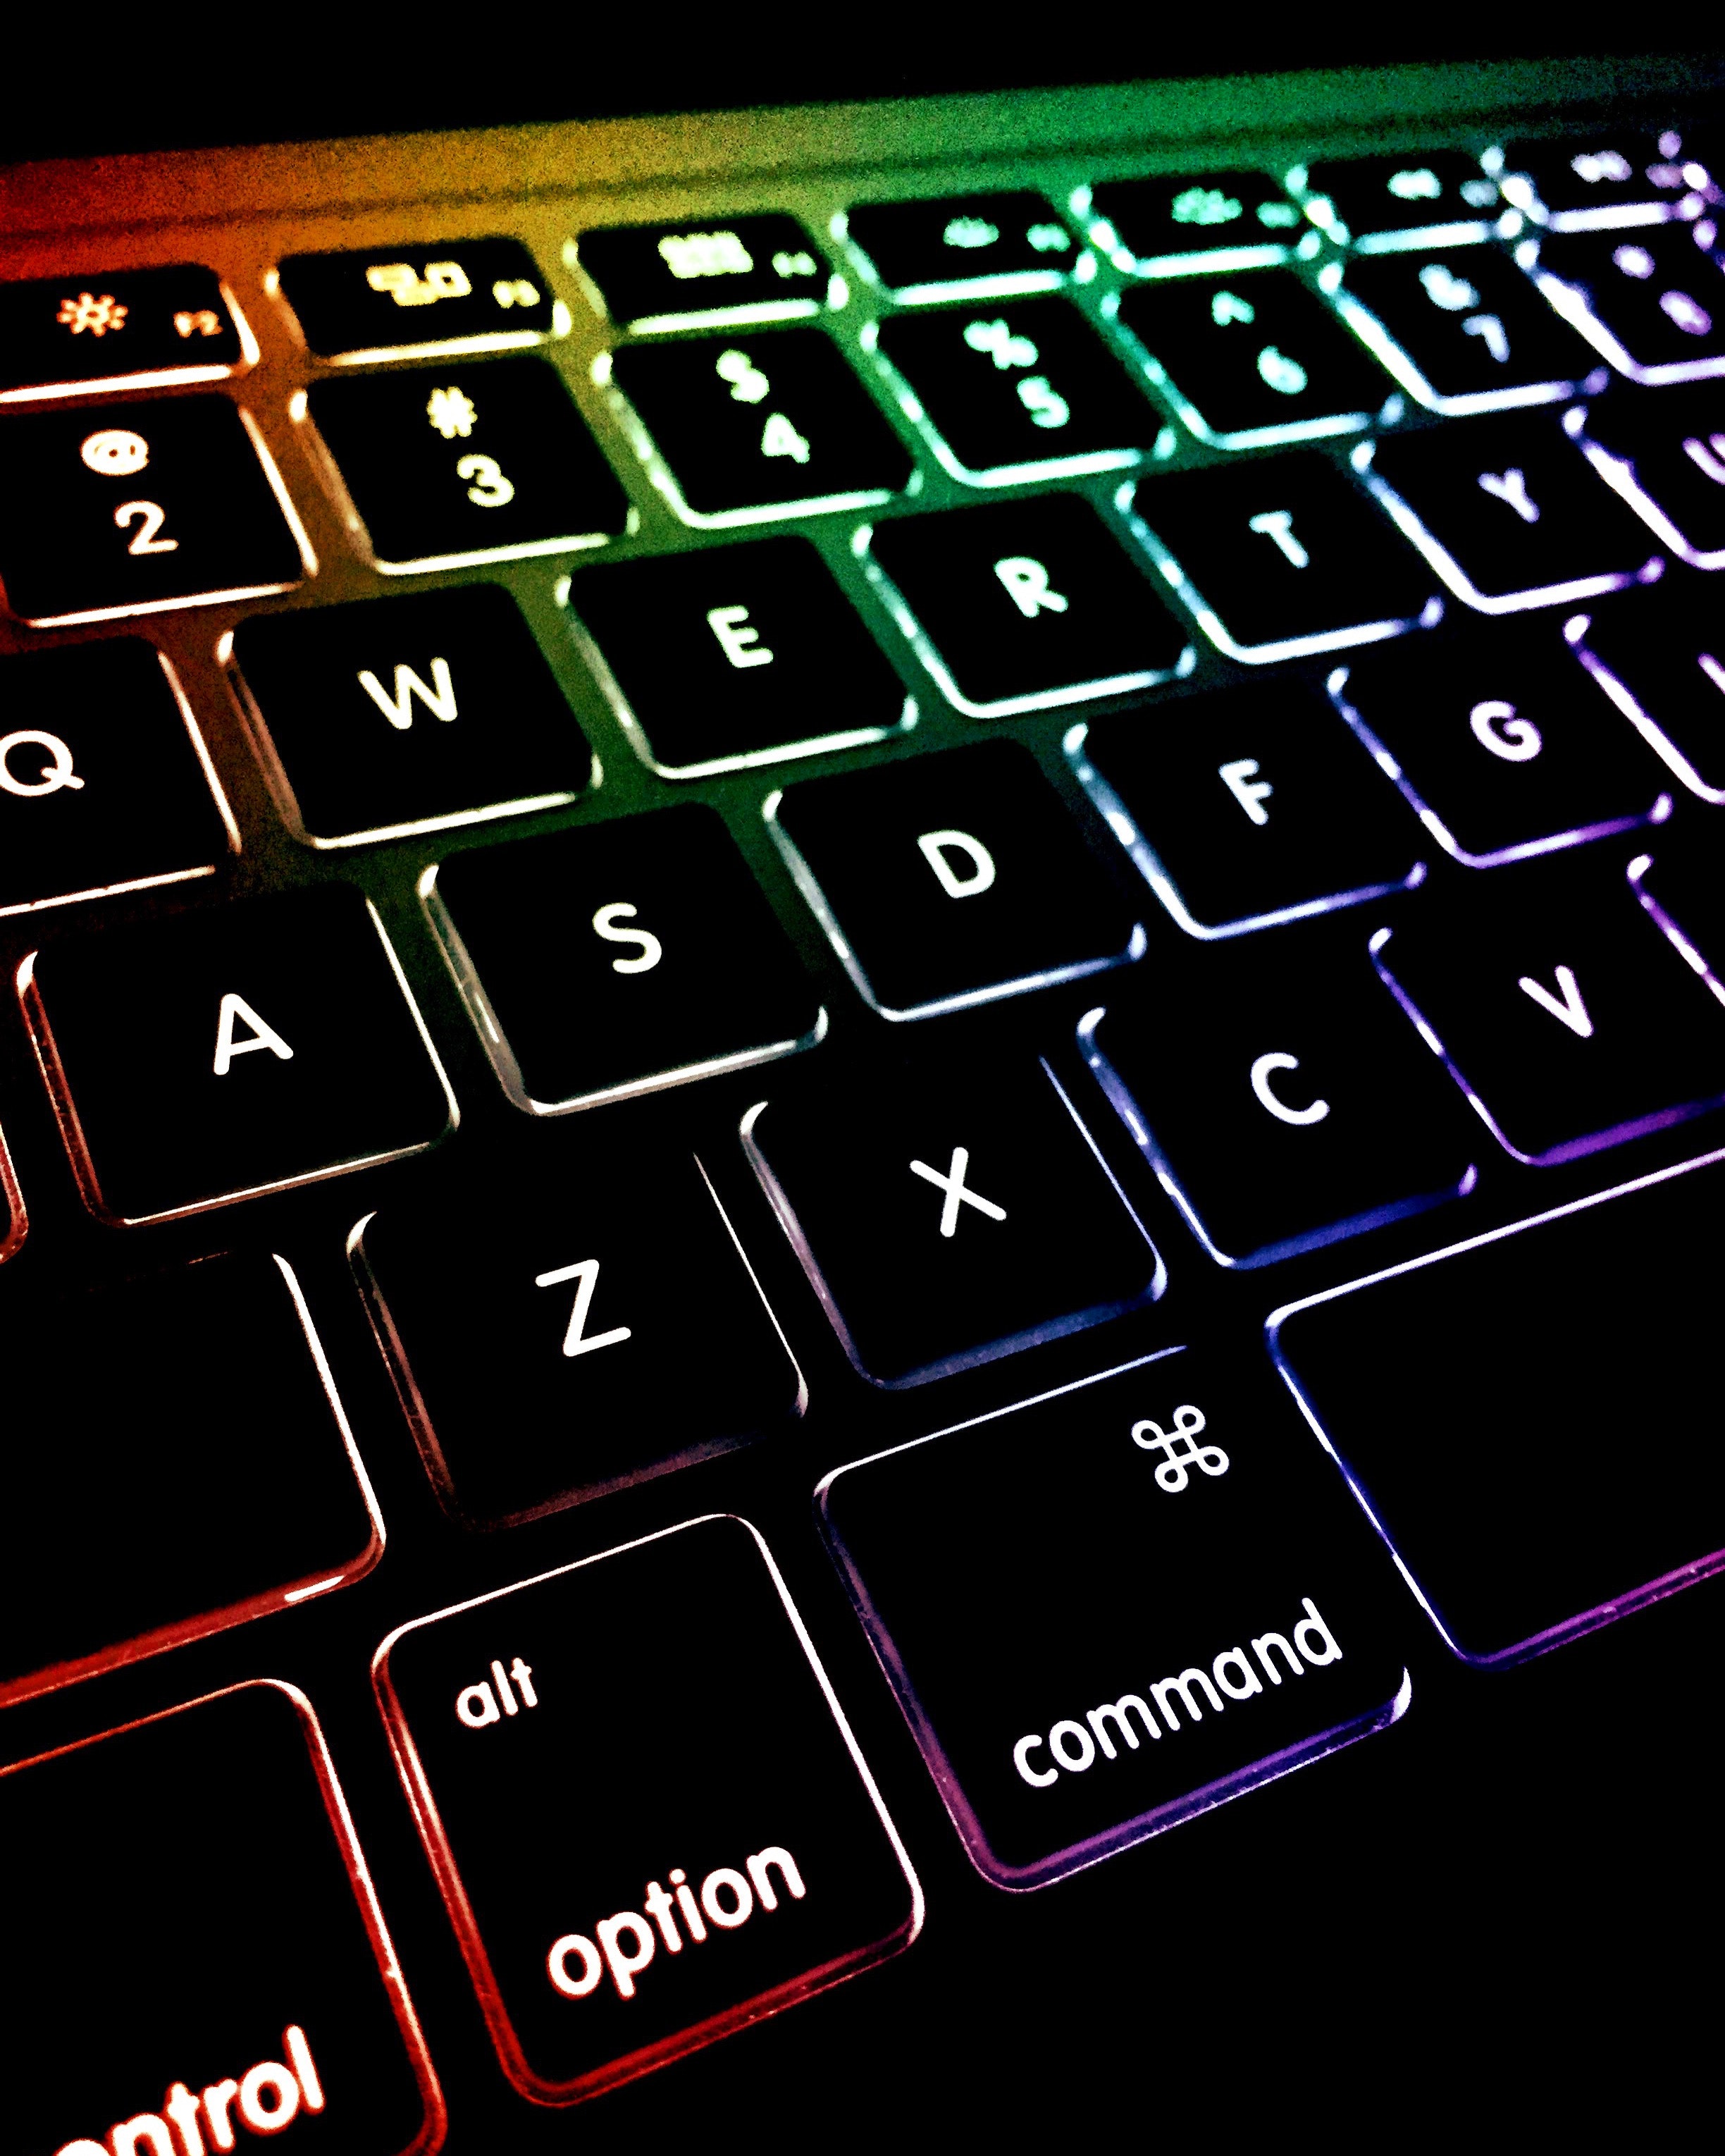 Keyboard with rainbow back lighting